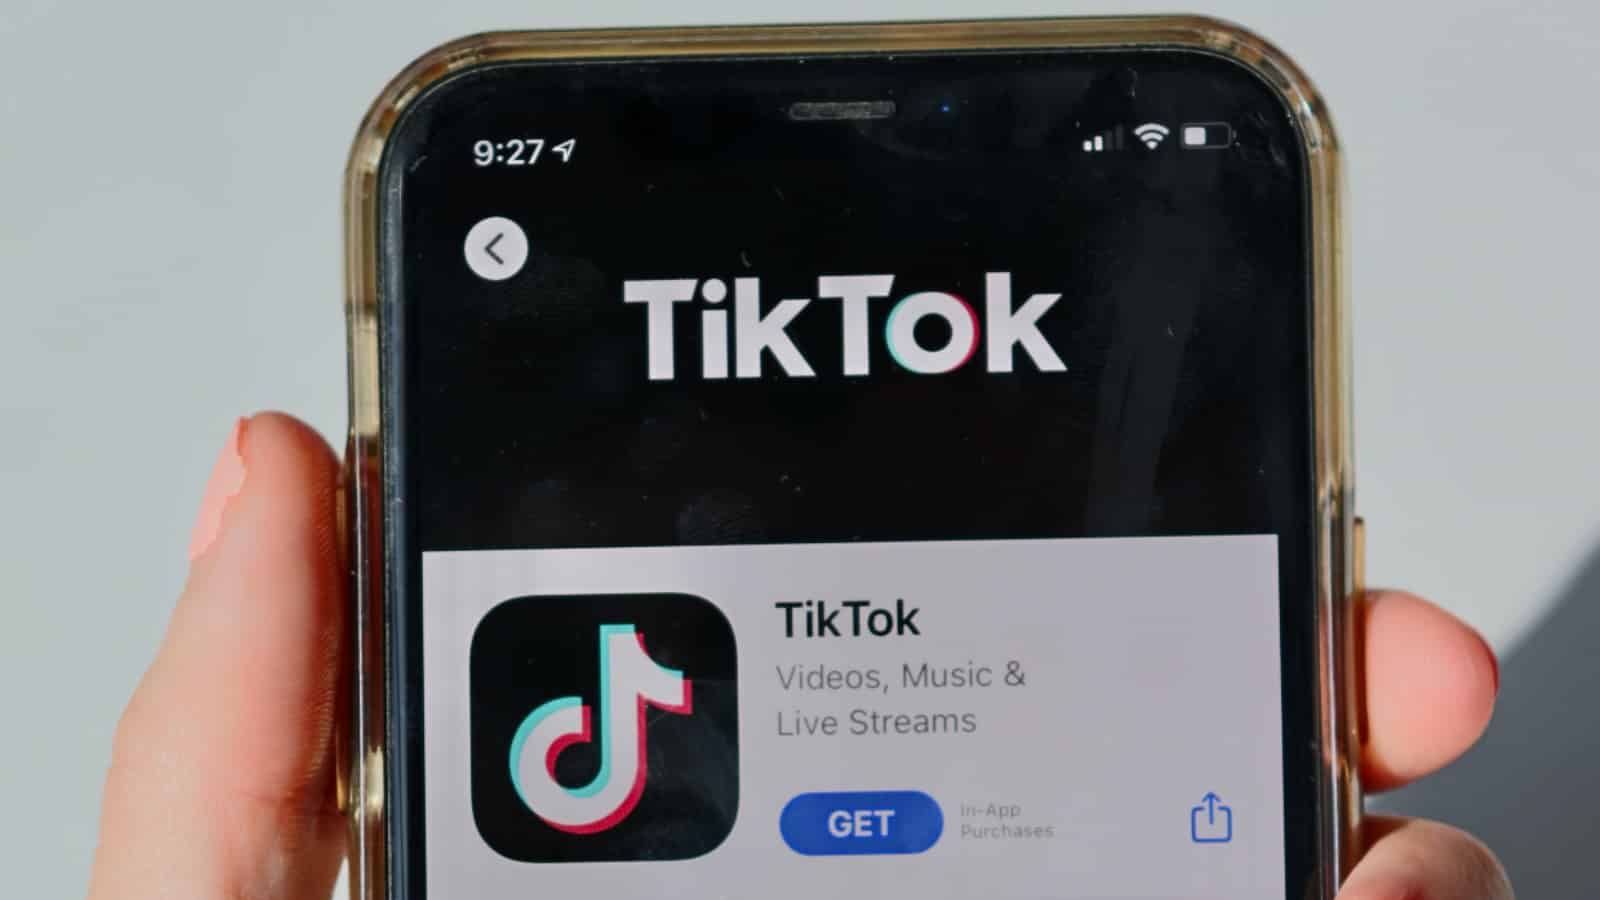 TikTok app store page on a phone